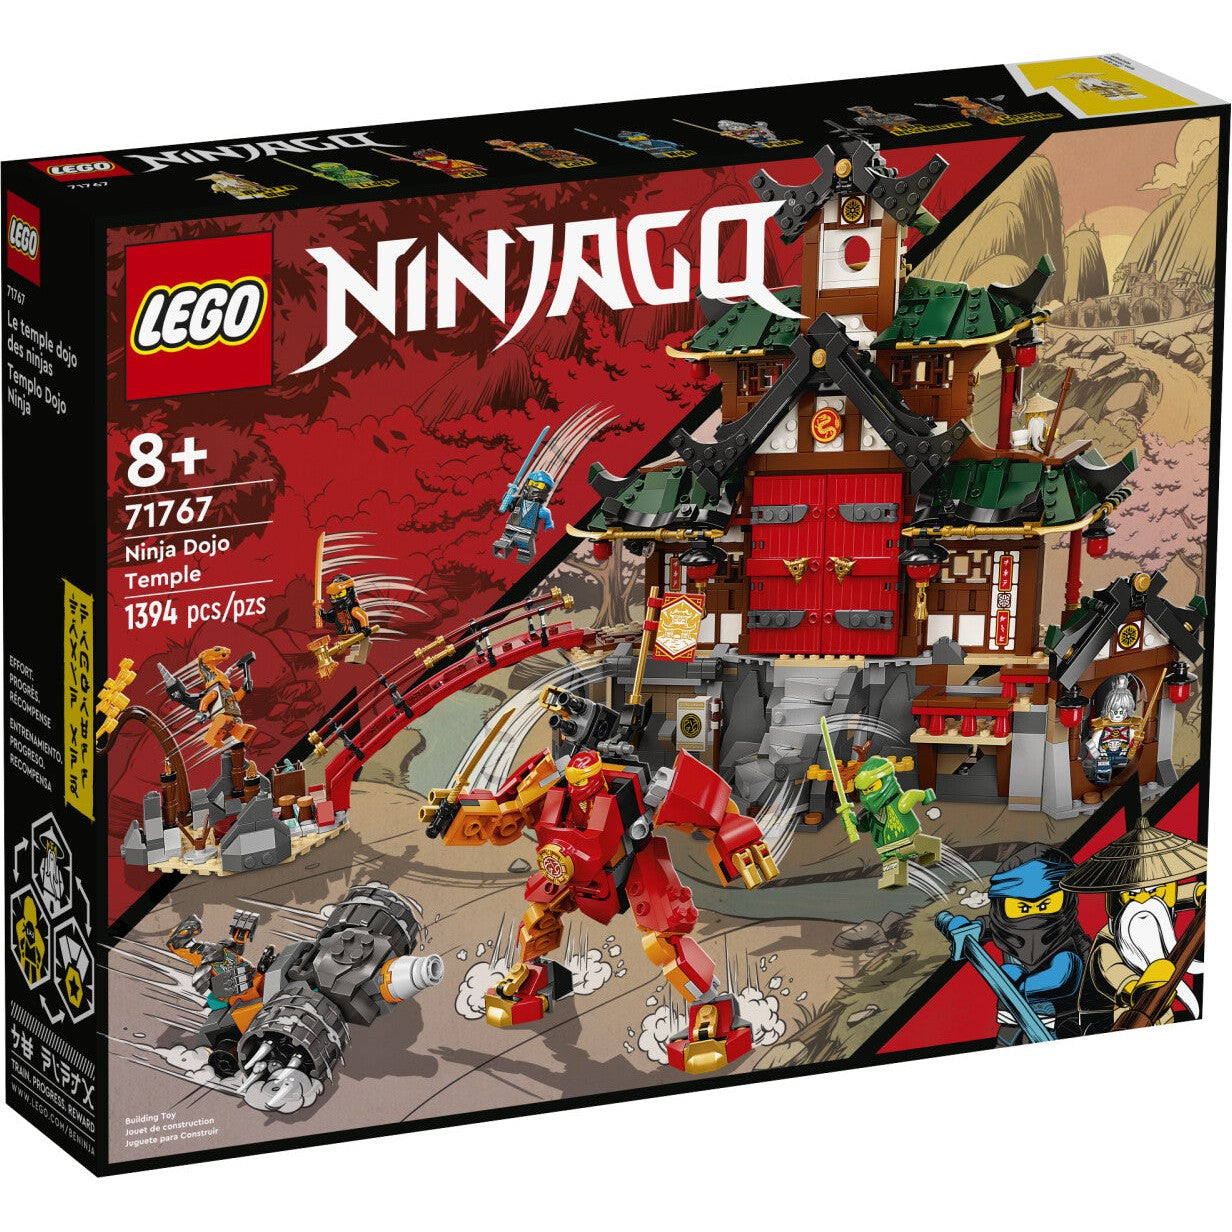 LEGO 71767 Ninjago Ninja Dojotempel